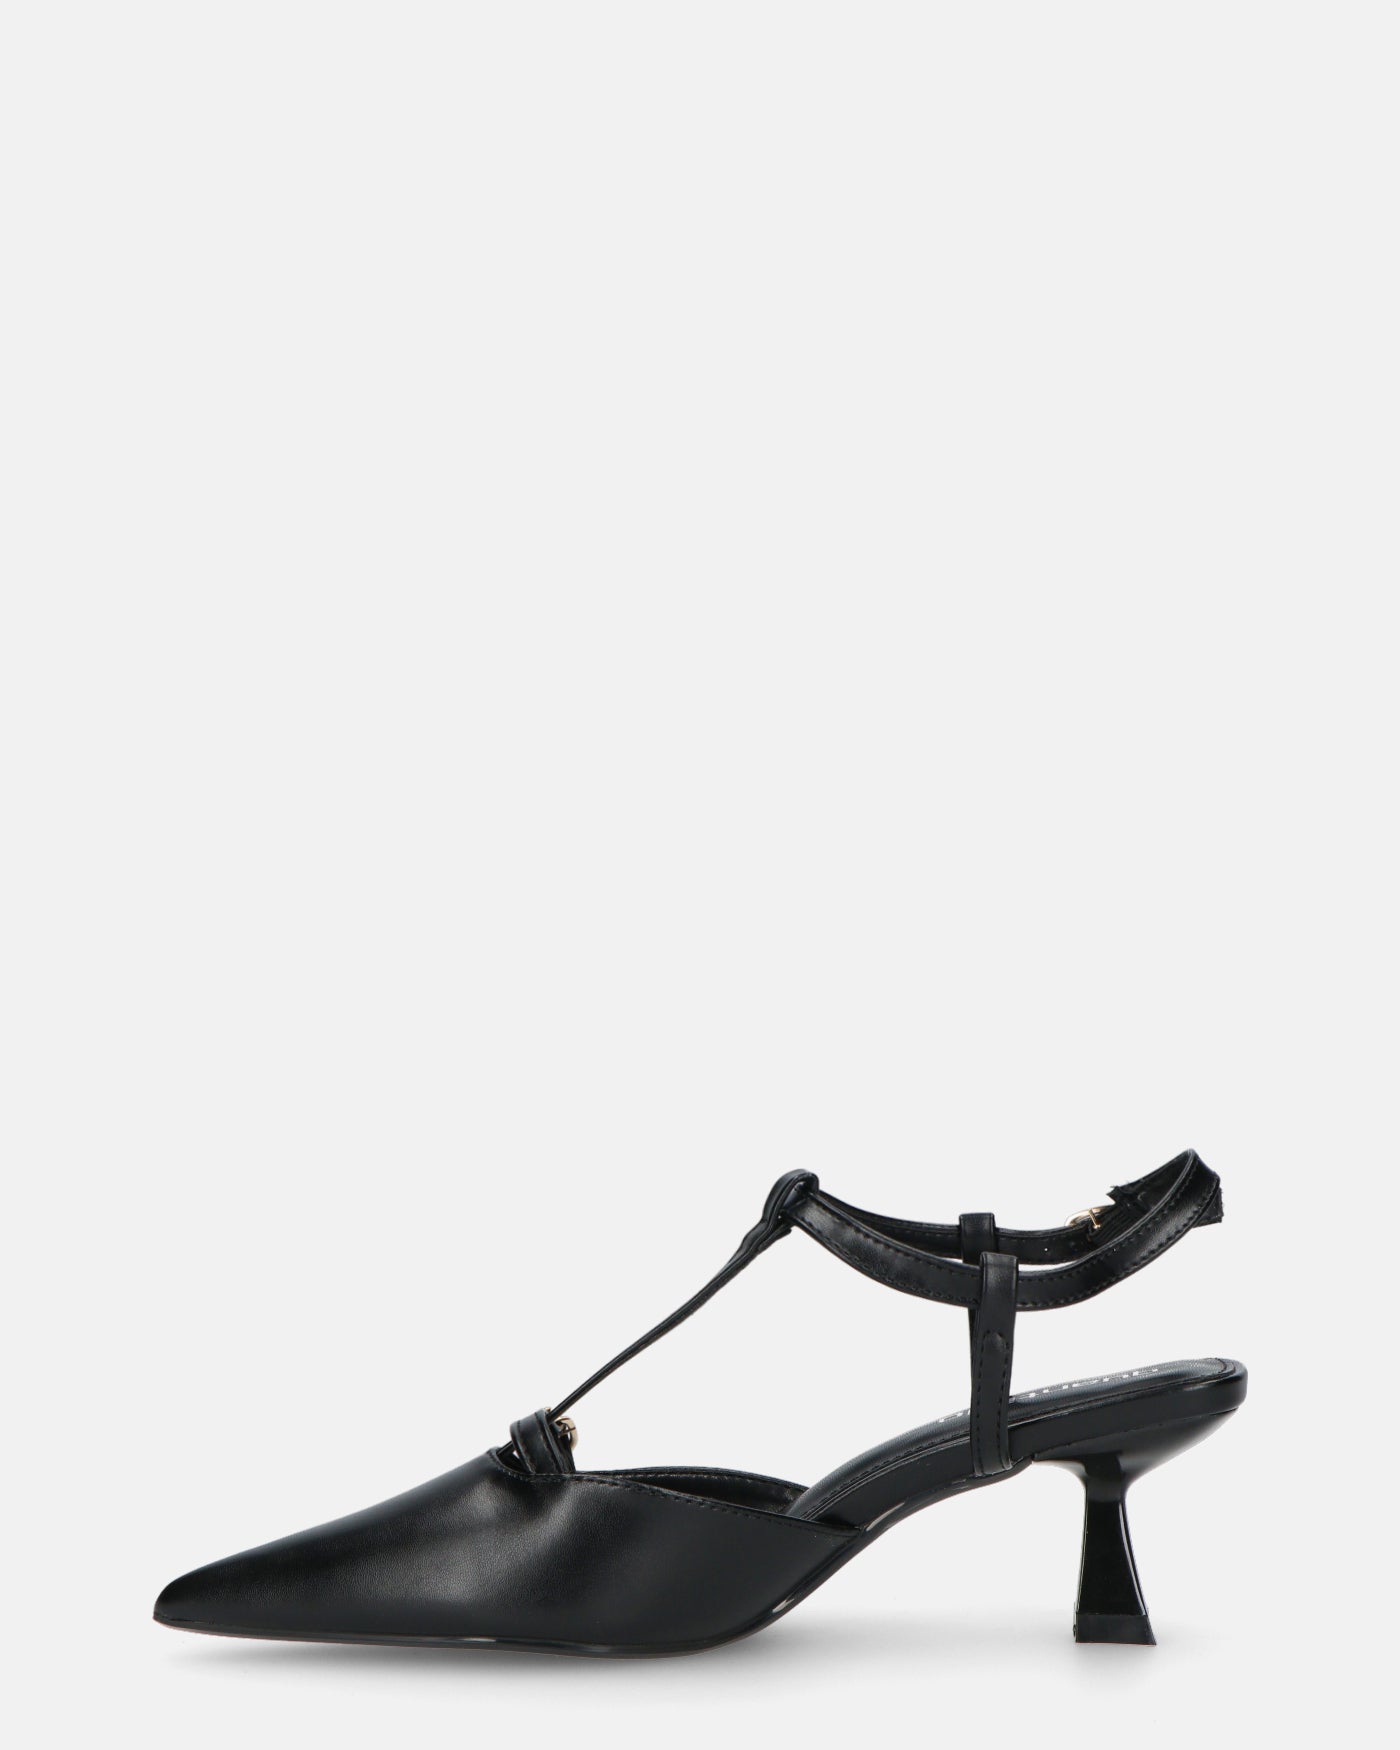 RASHIDA - black low heel pump